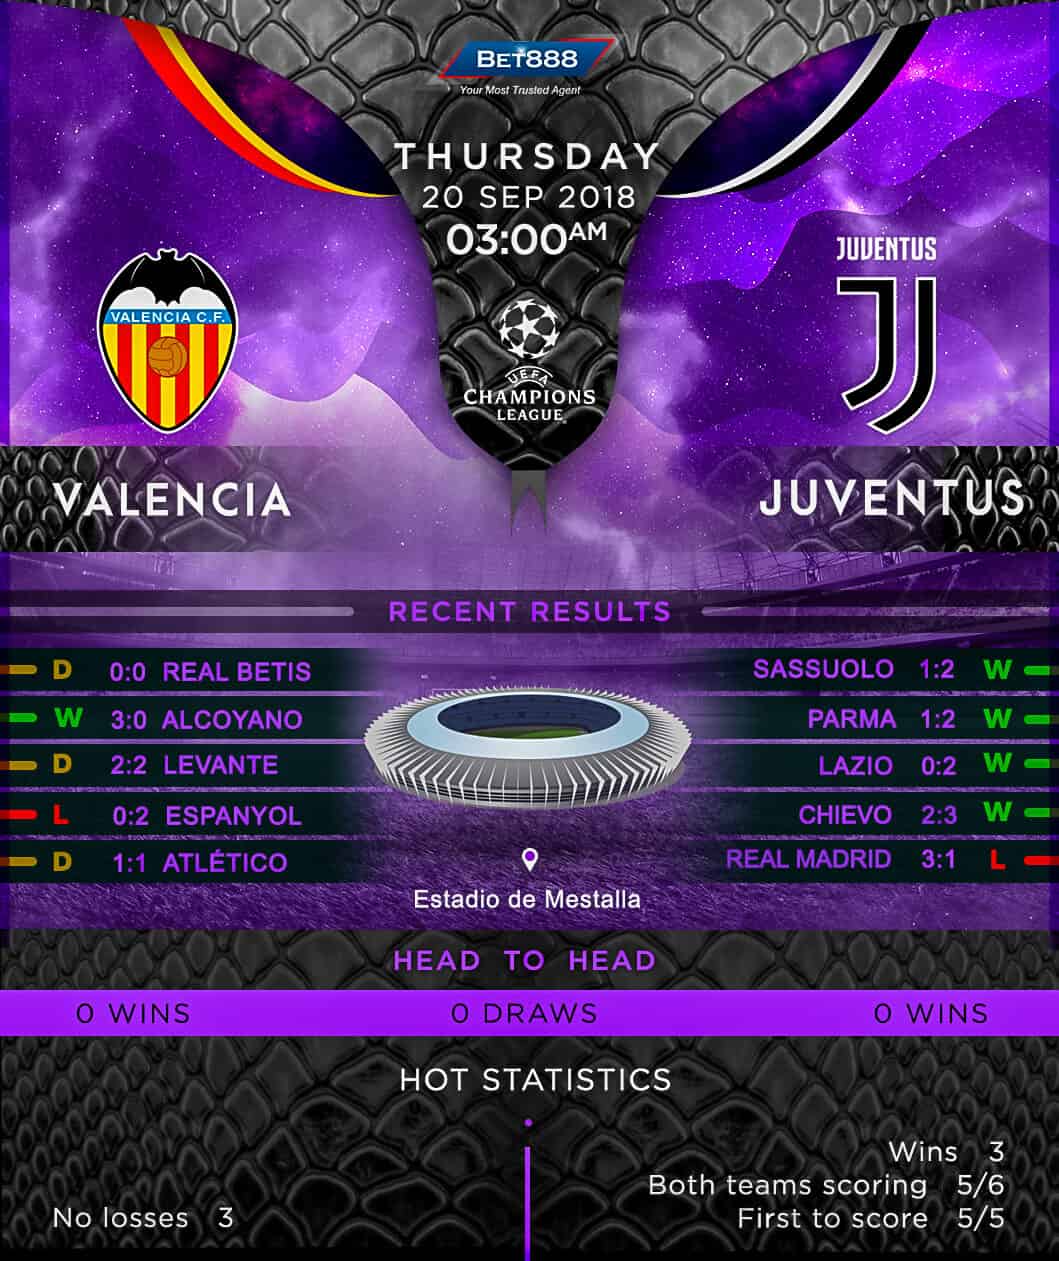 Valencia vs Juventus 20/09/18